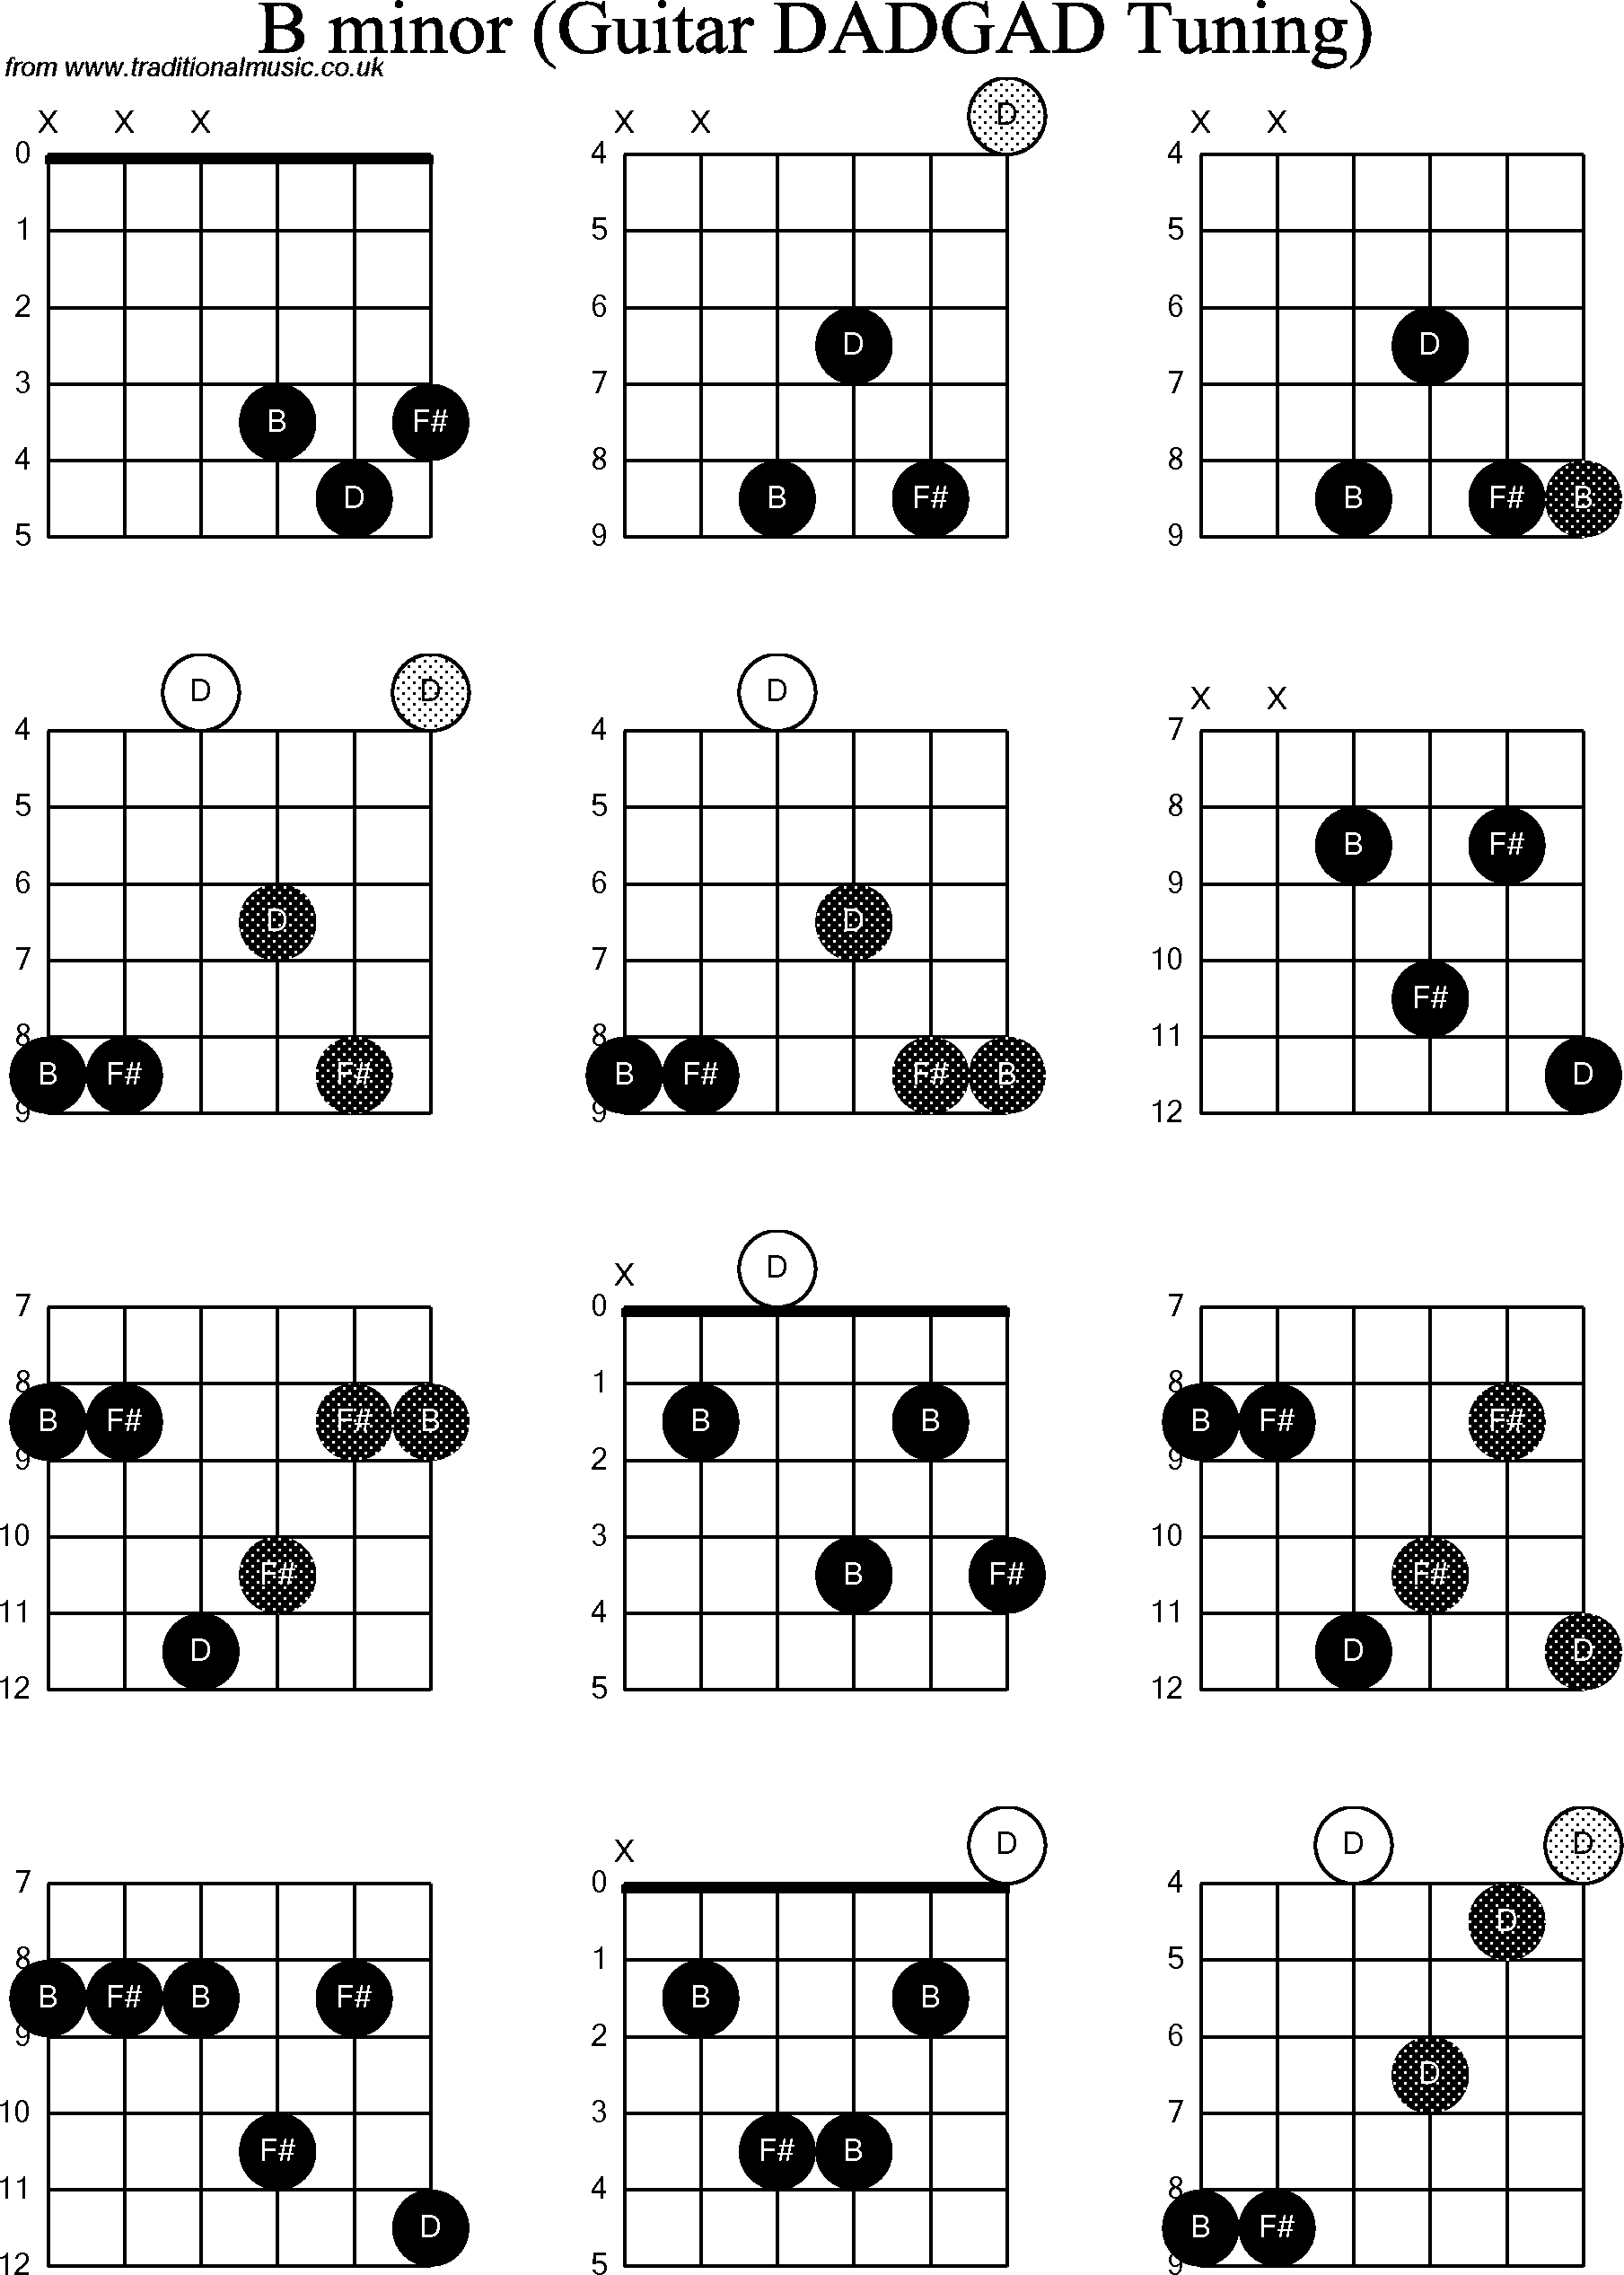 Chord Diagrams for D Modal Guitar(DADGAD), B Minor